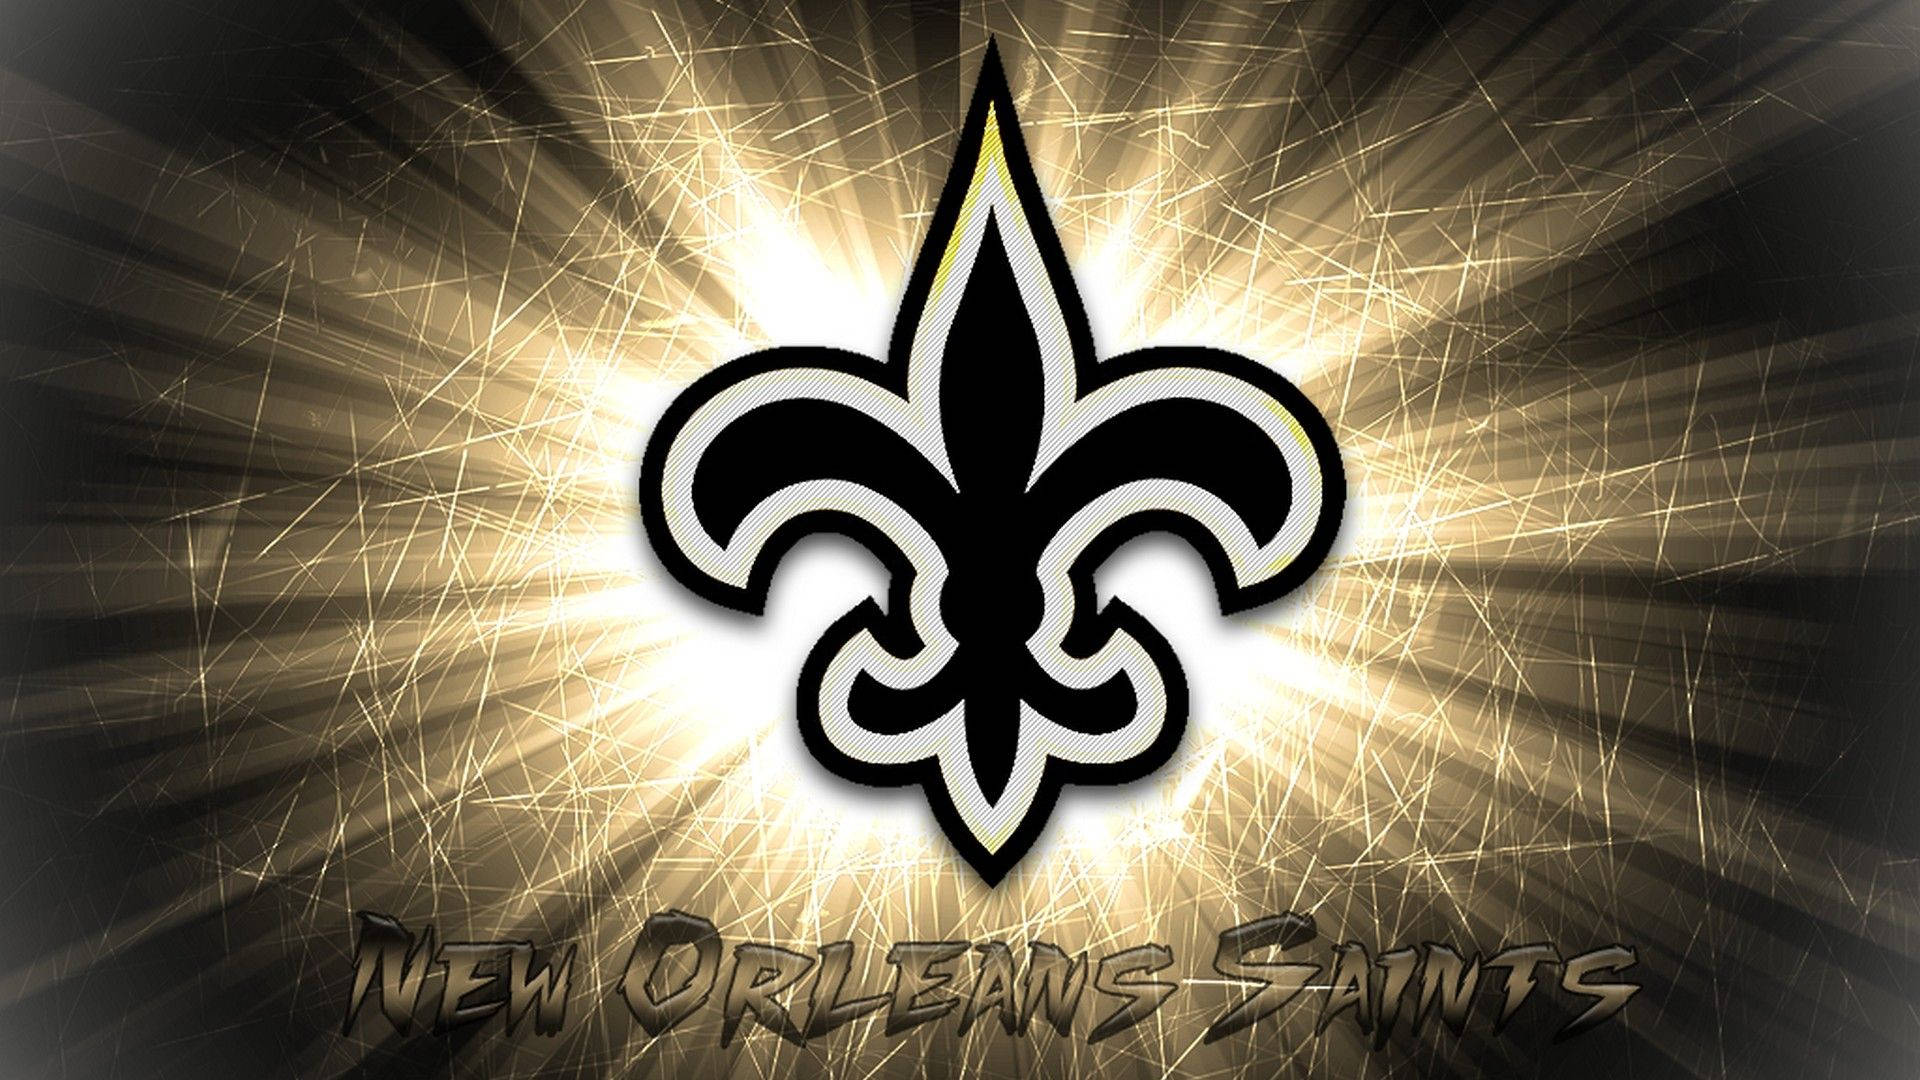 Stunning New Orleans Saints Art Background